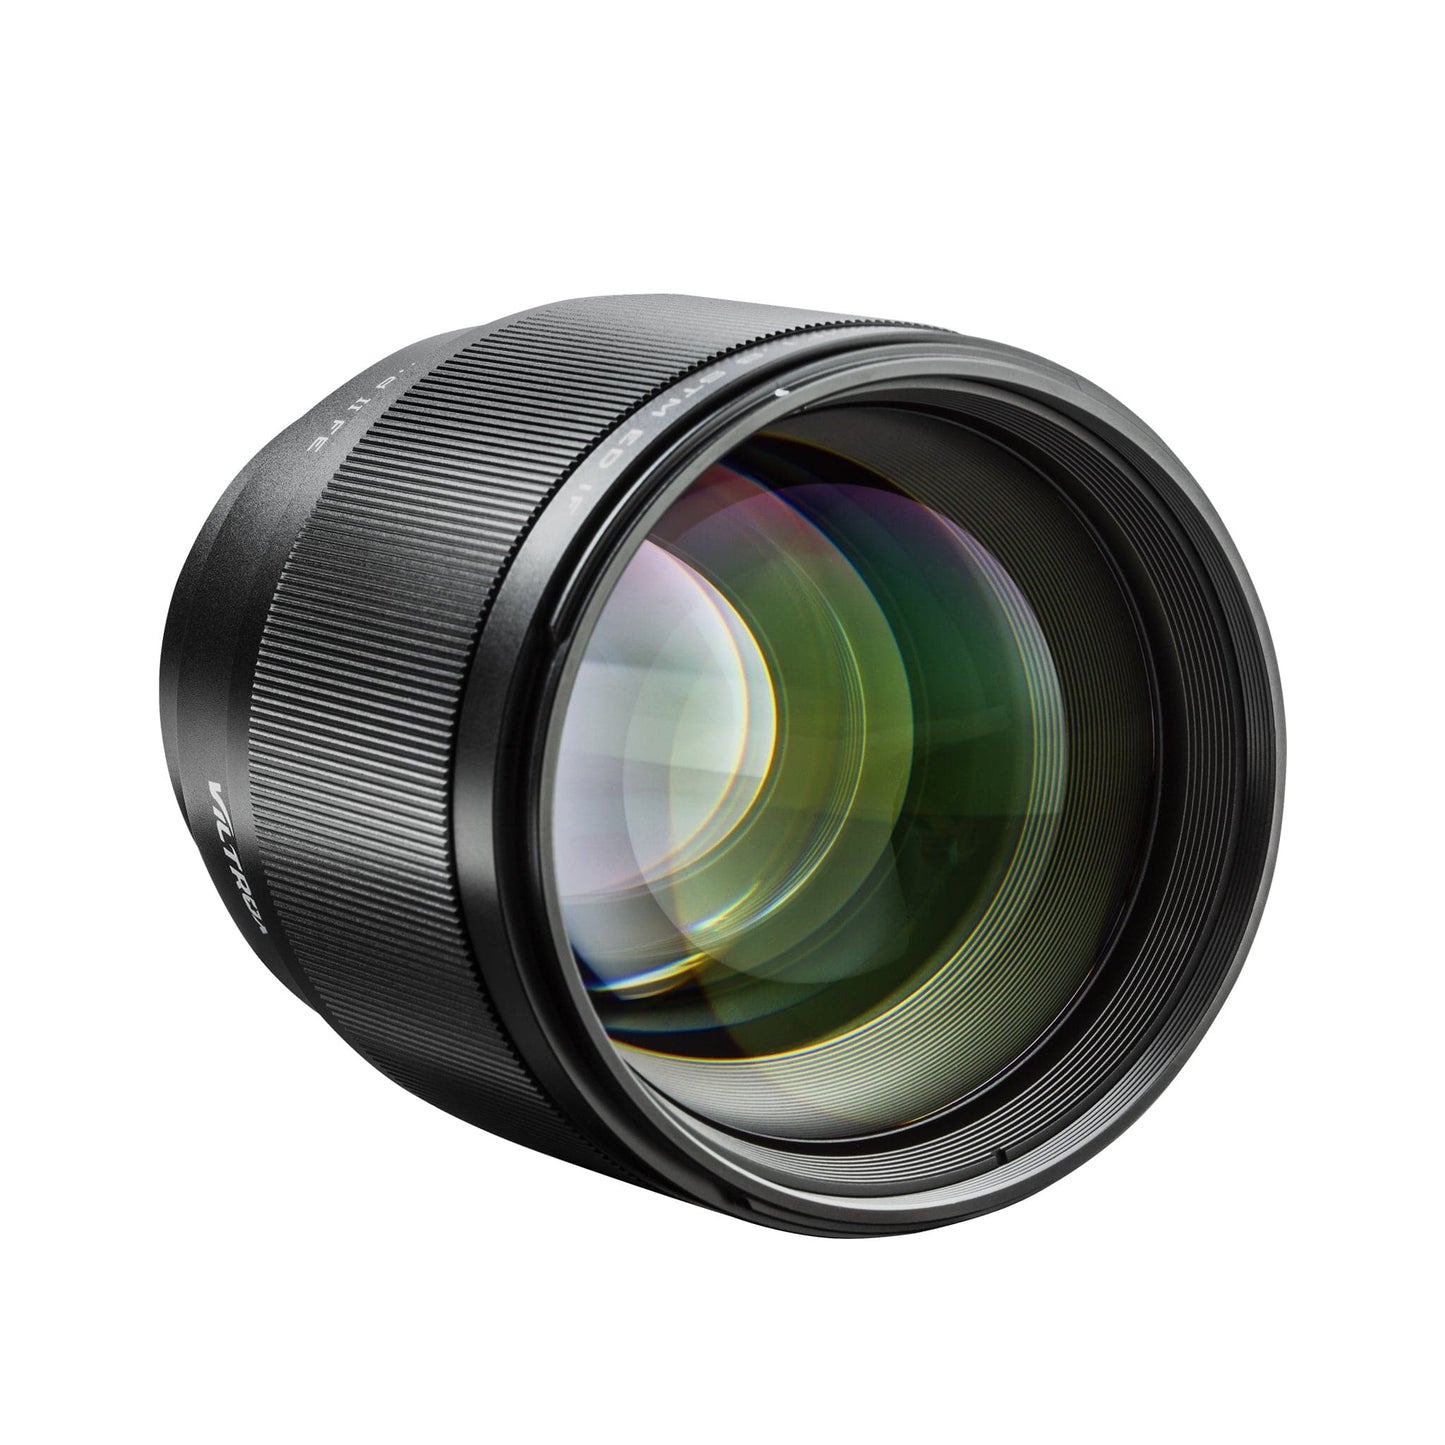 Viltrox 85mm f1.8 FE-mount Sony Autofocus Prime Lens with Quality Lens Hood Fast Eye-AF Mark II